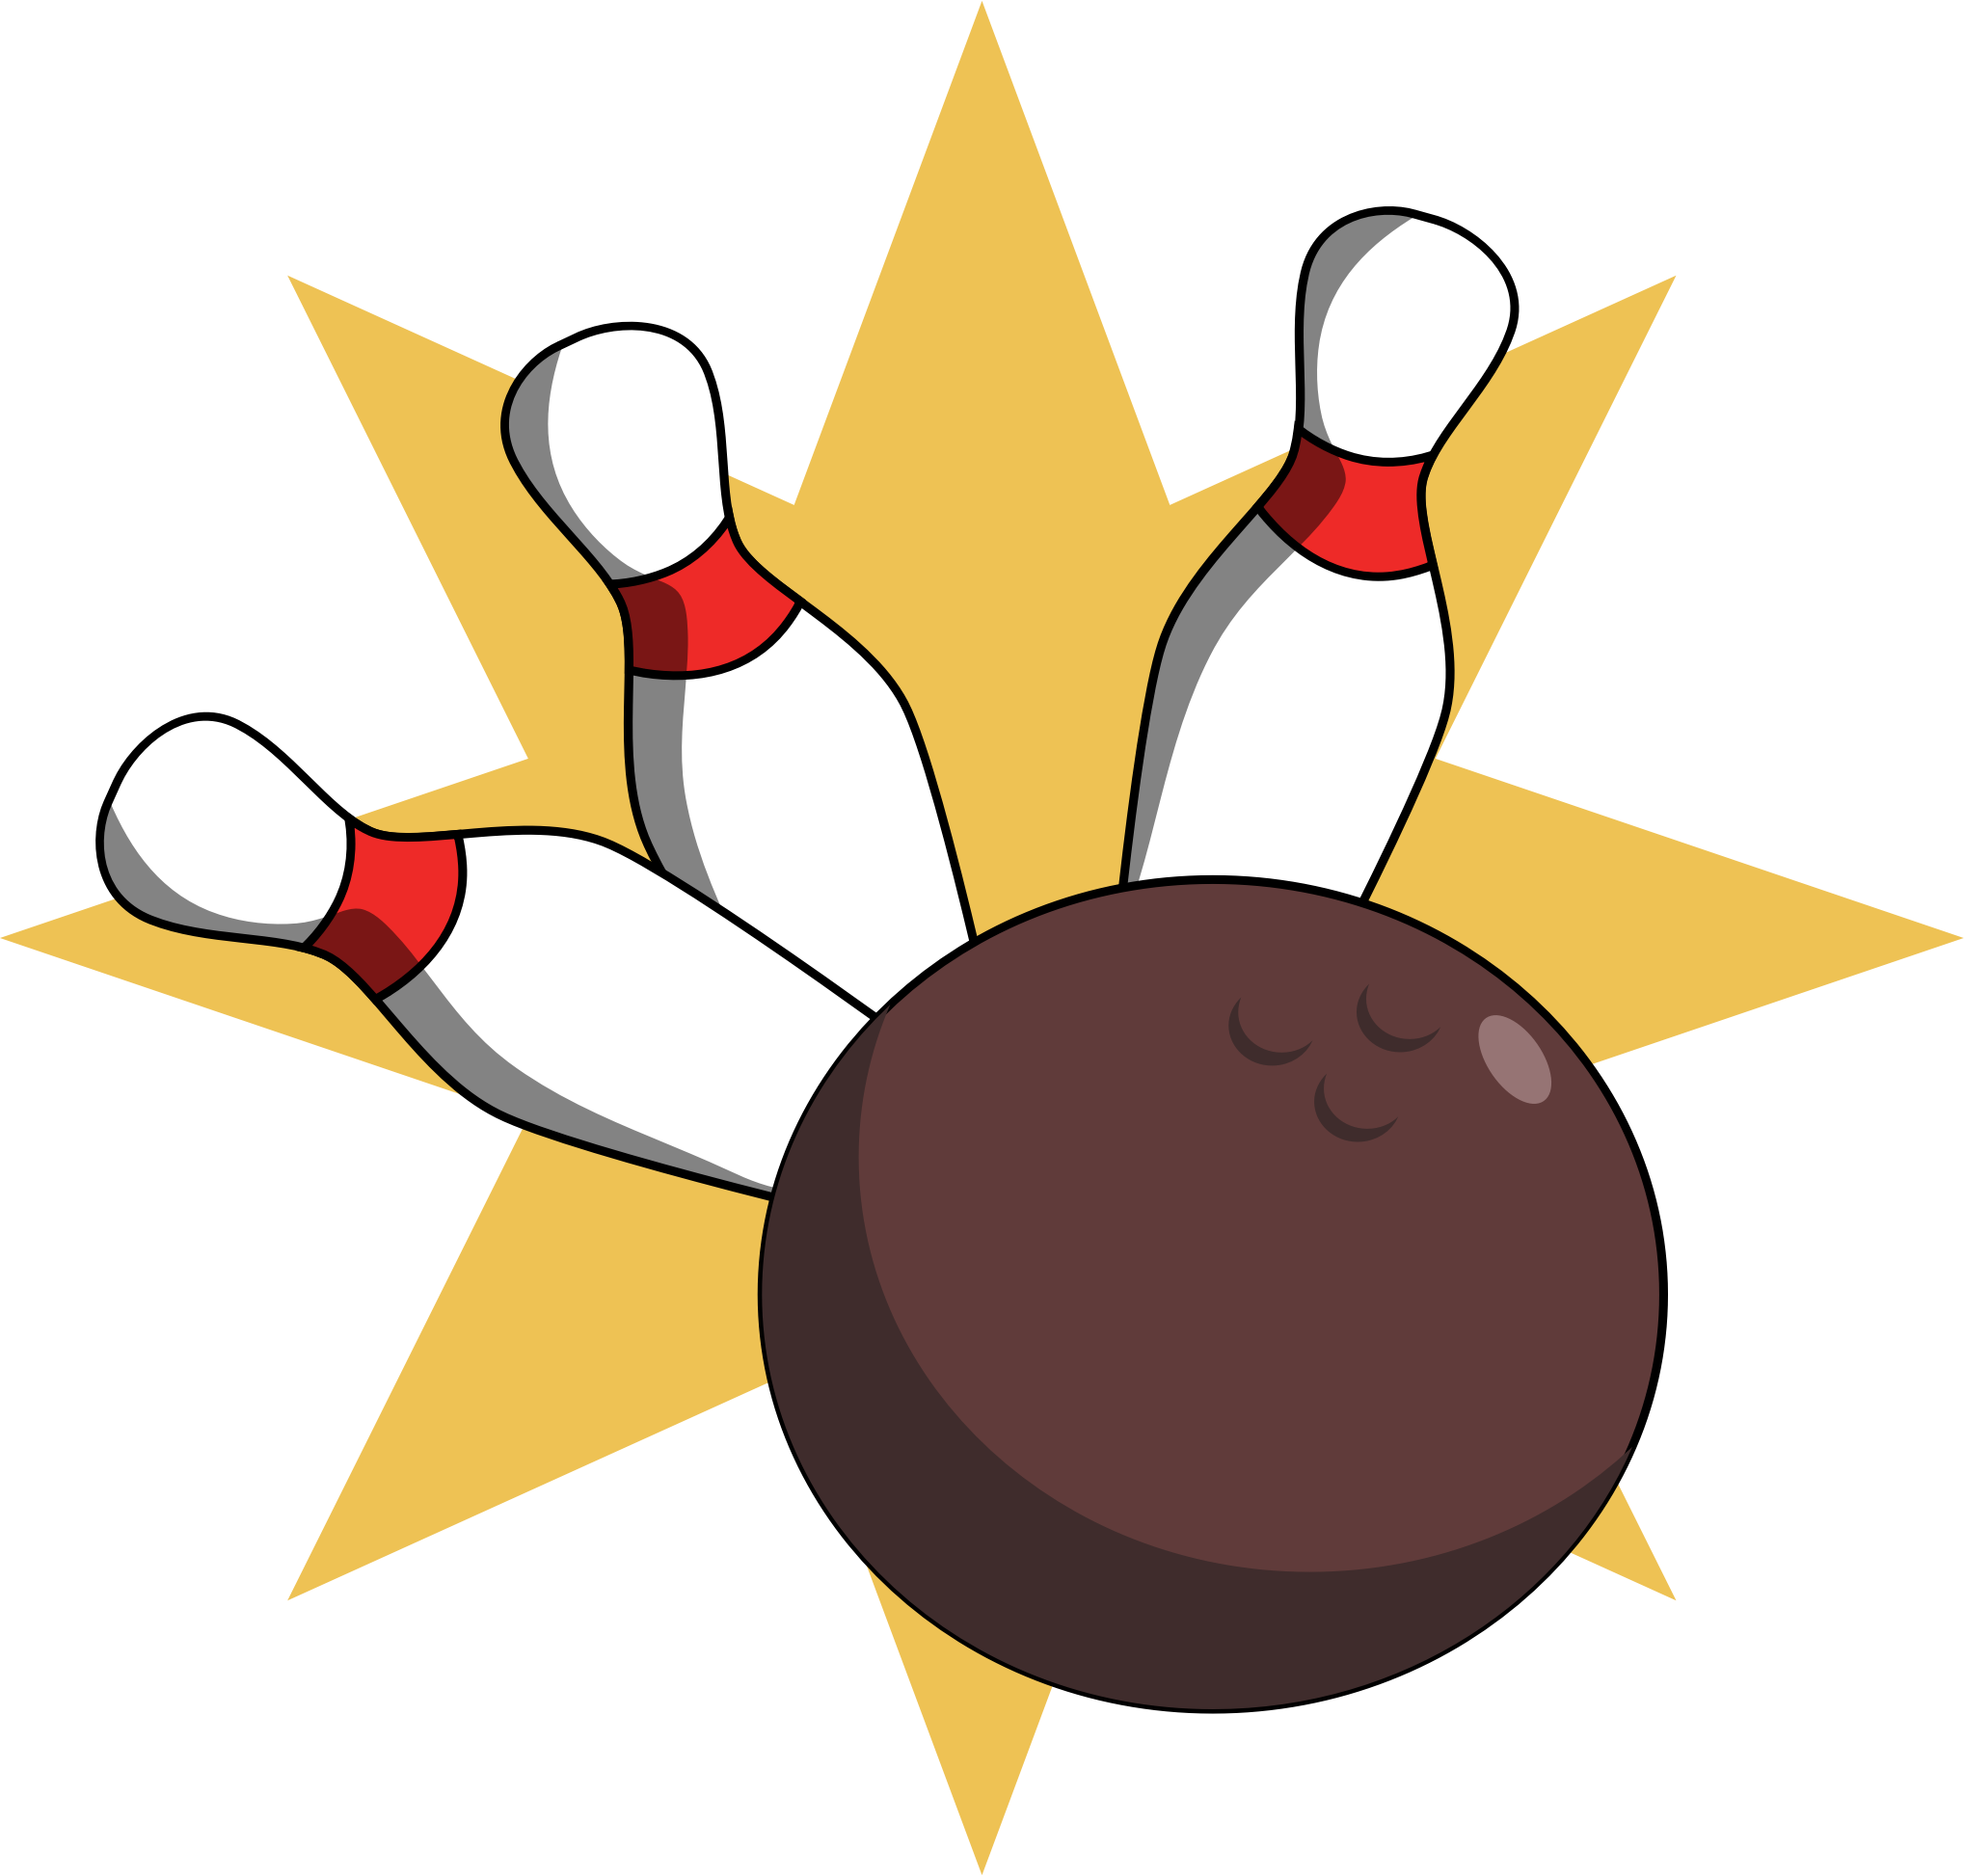 Bowling Ball hitting pins vector clipart image - Free stock photo